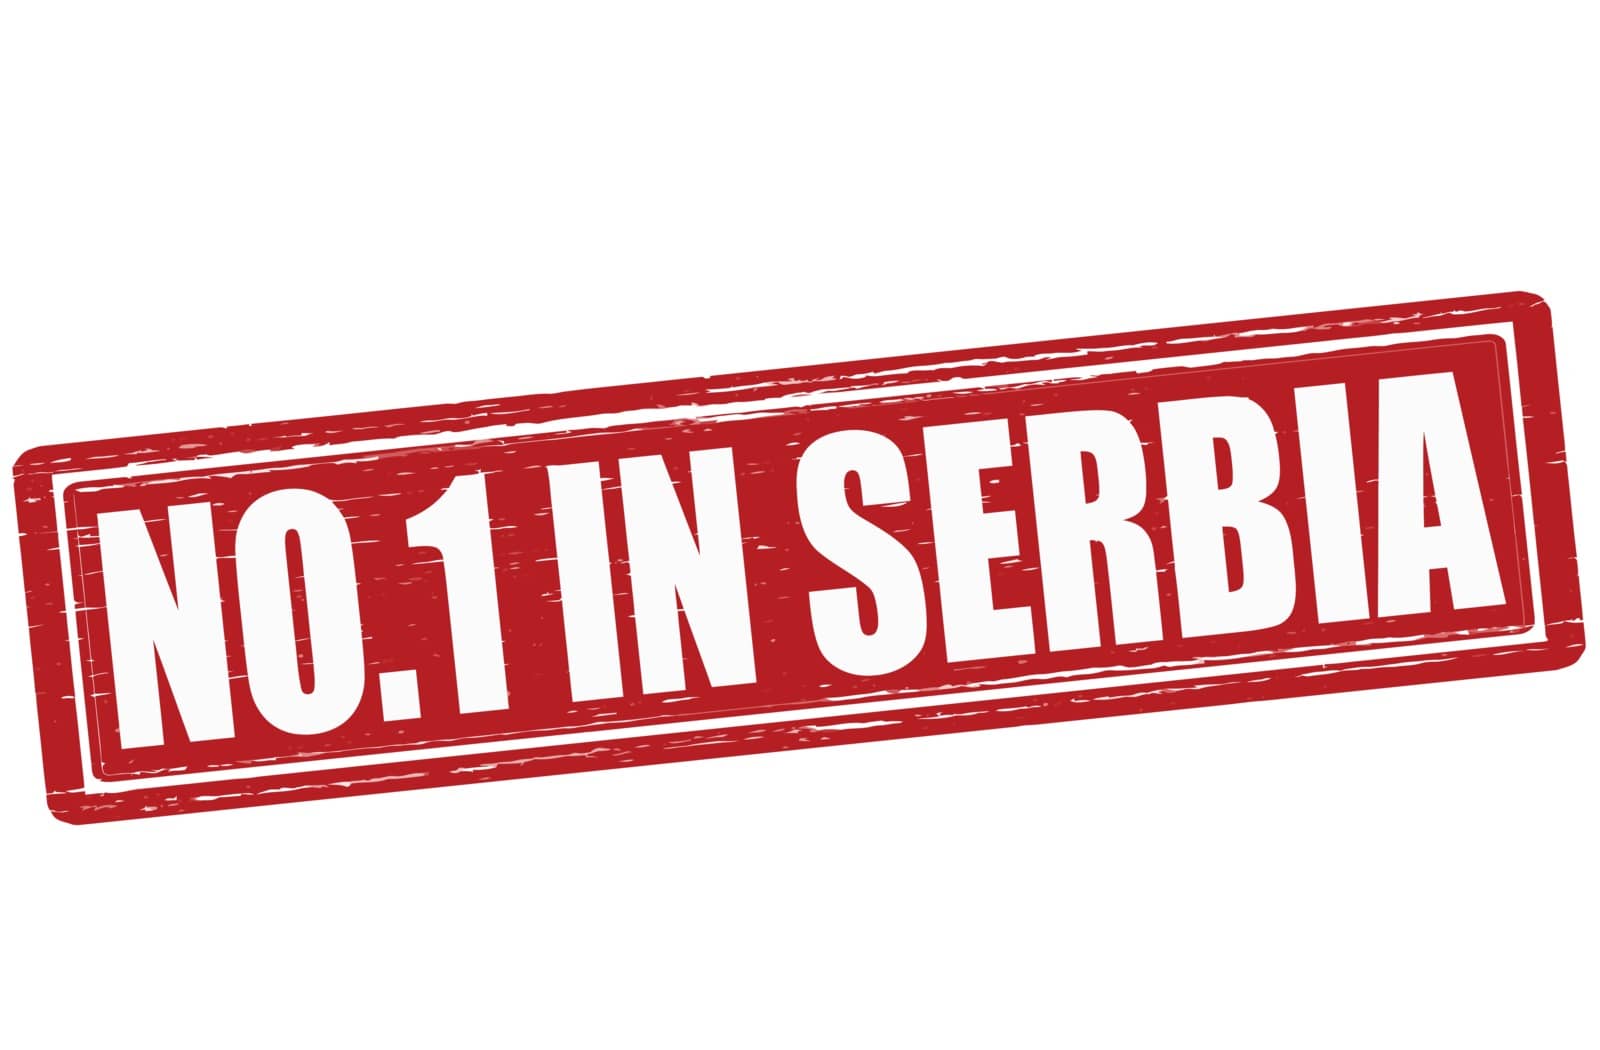 No one in Serbia by carmenbobo